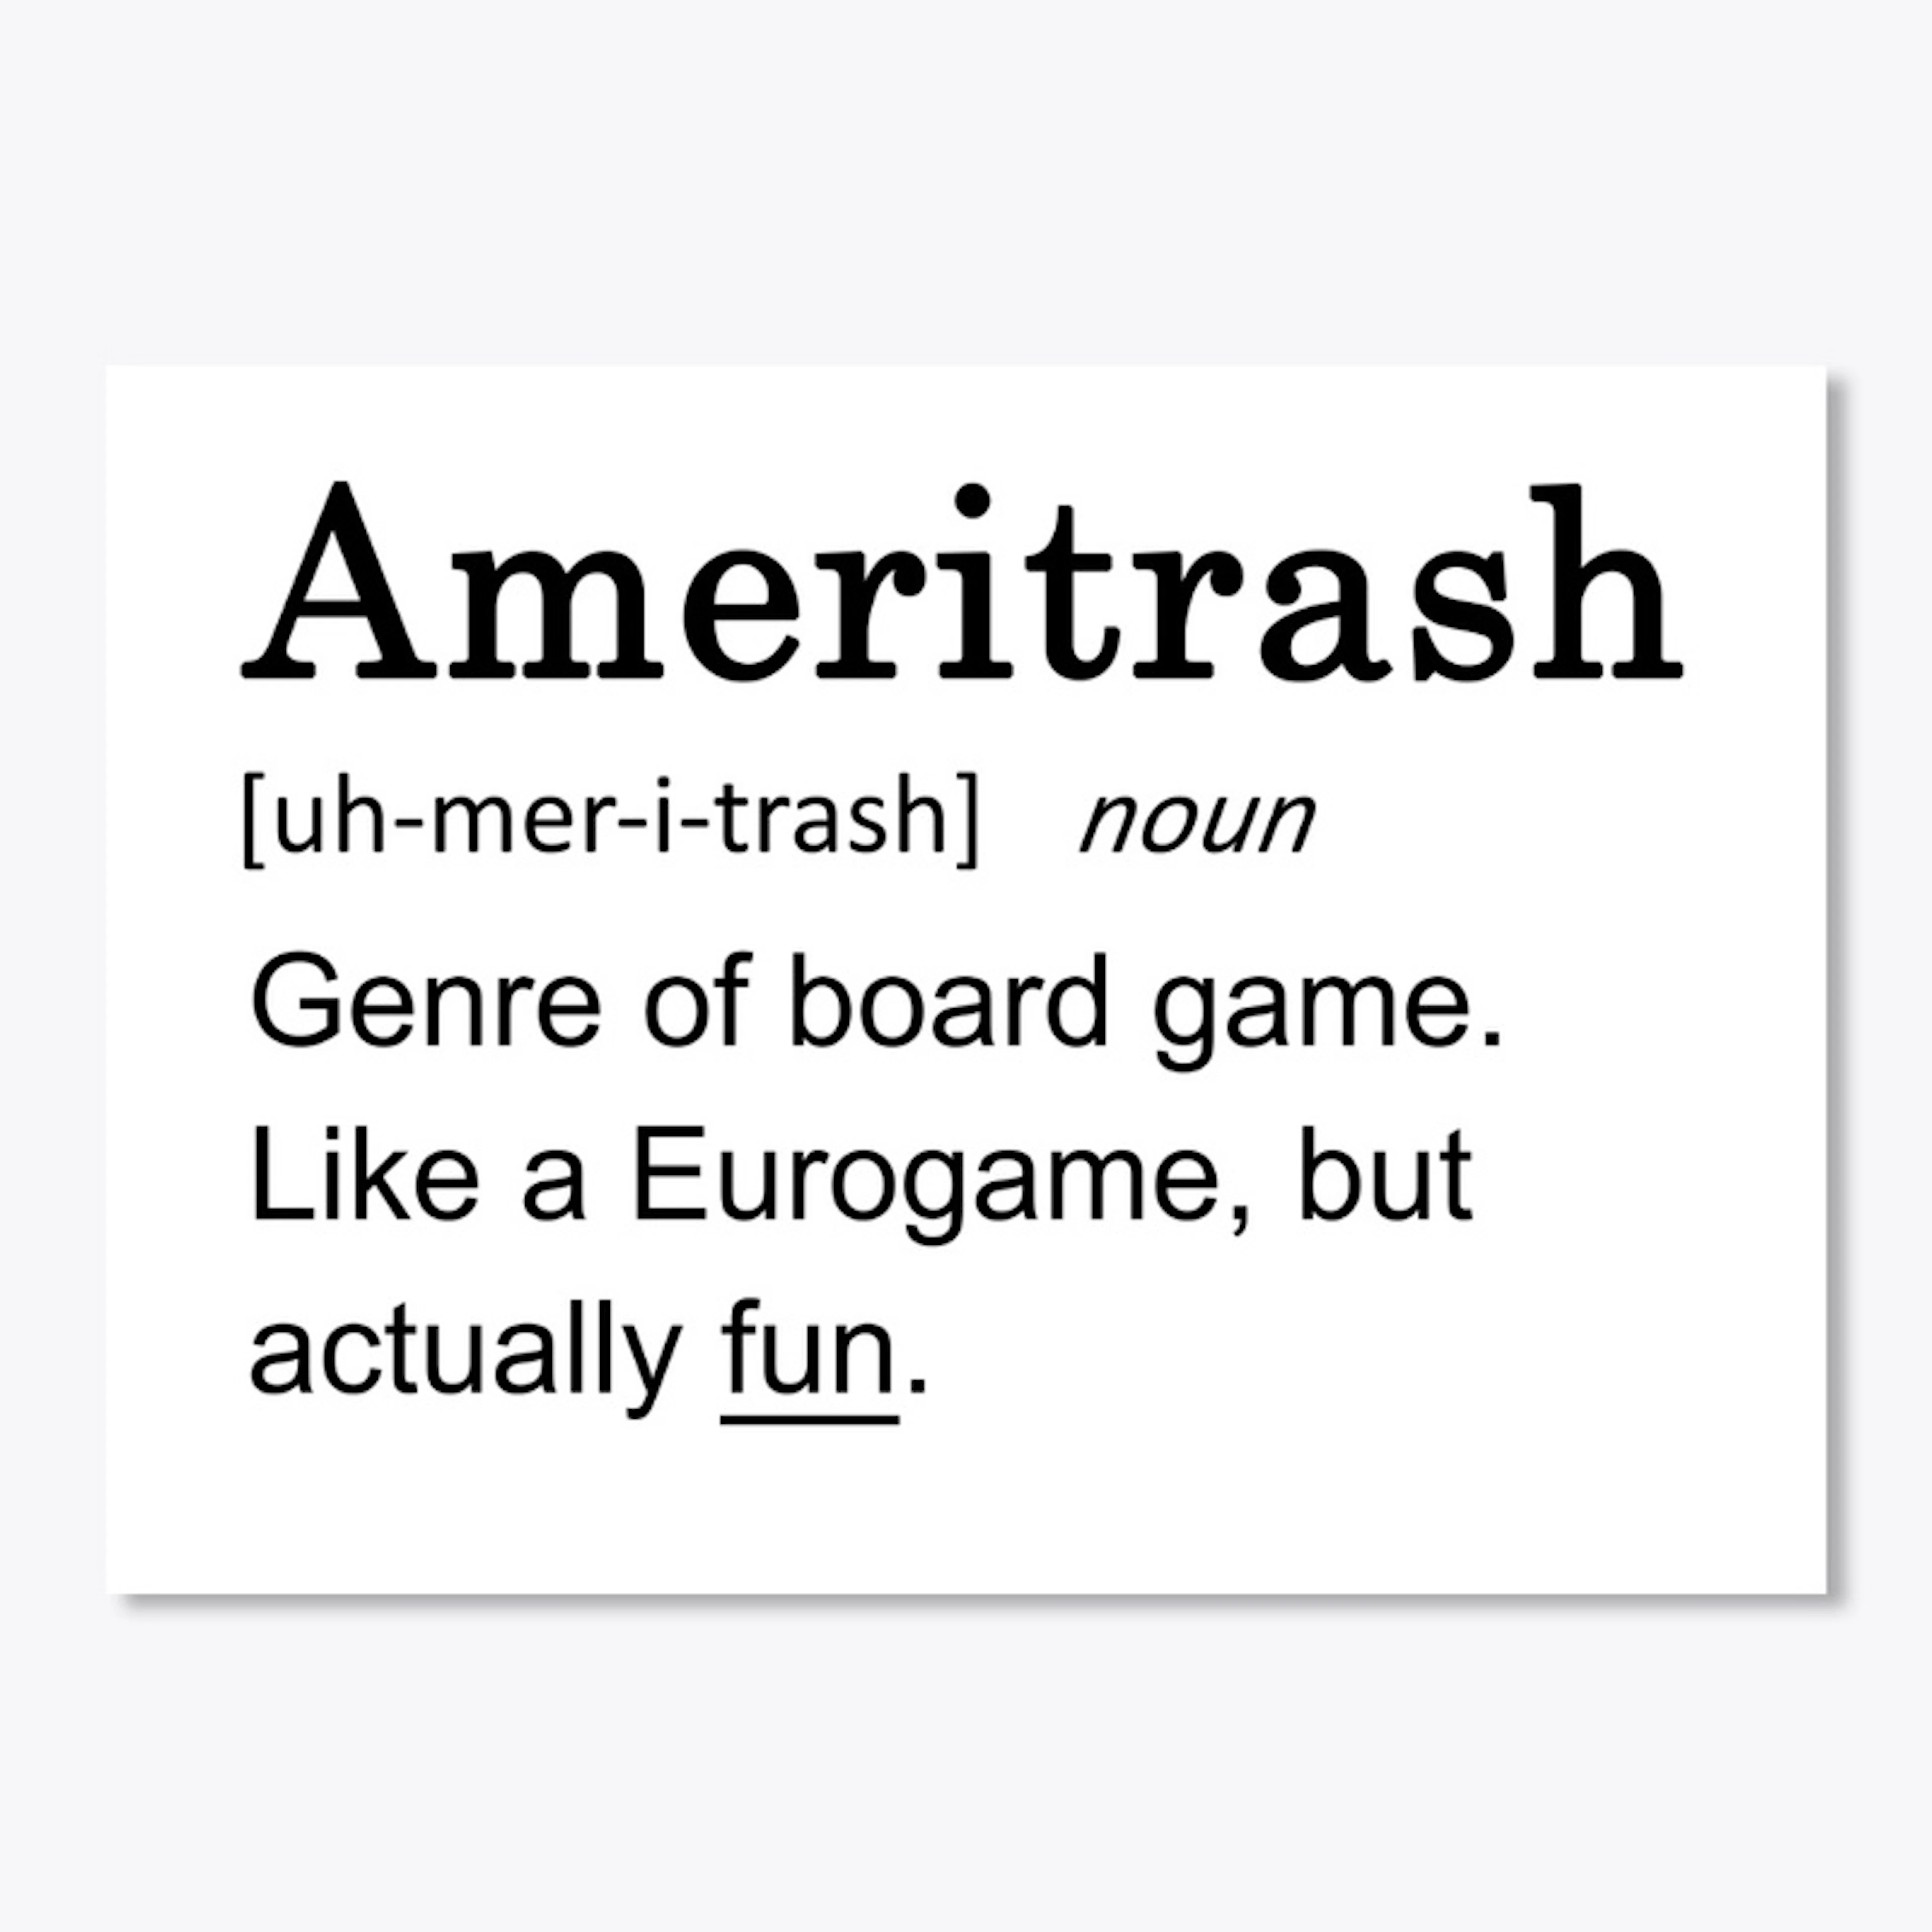 Ameritrash = Fun